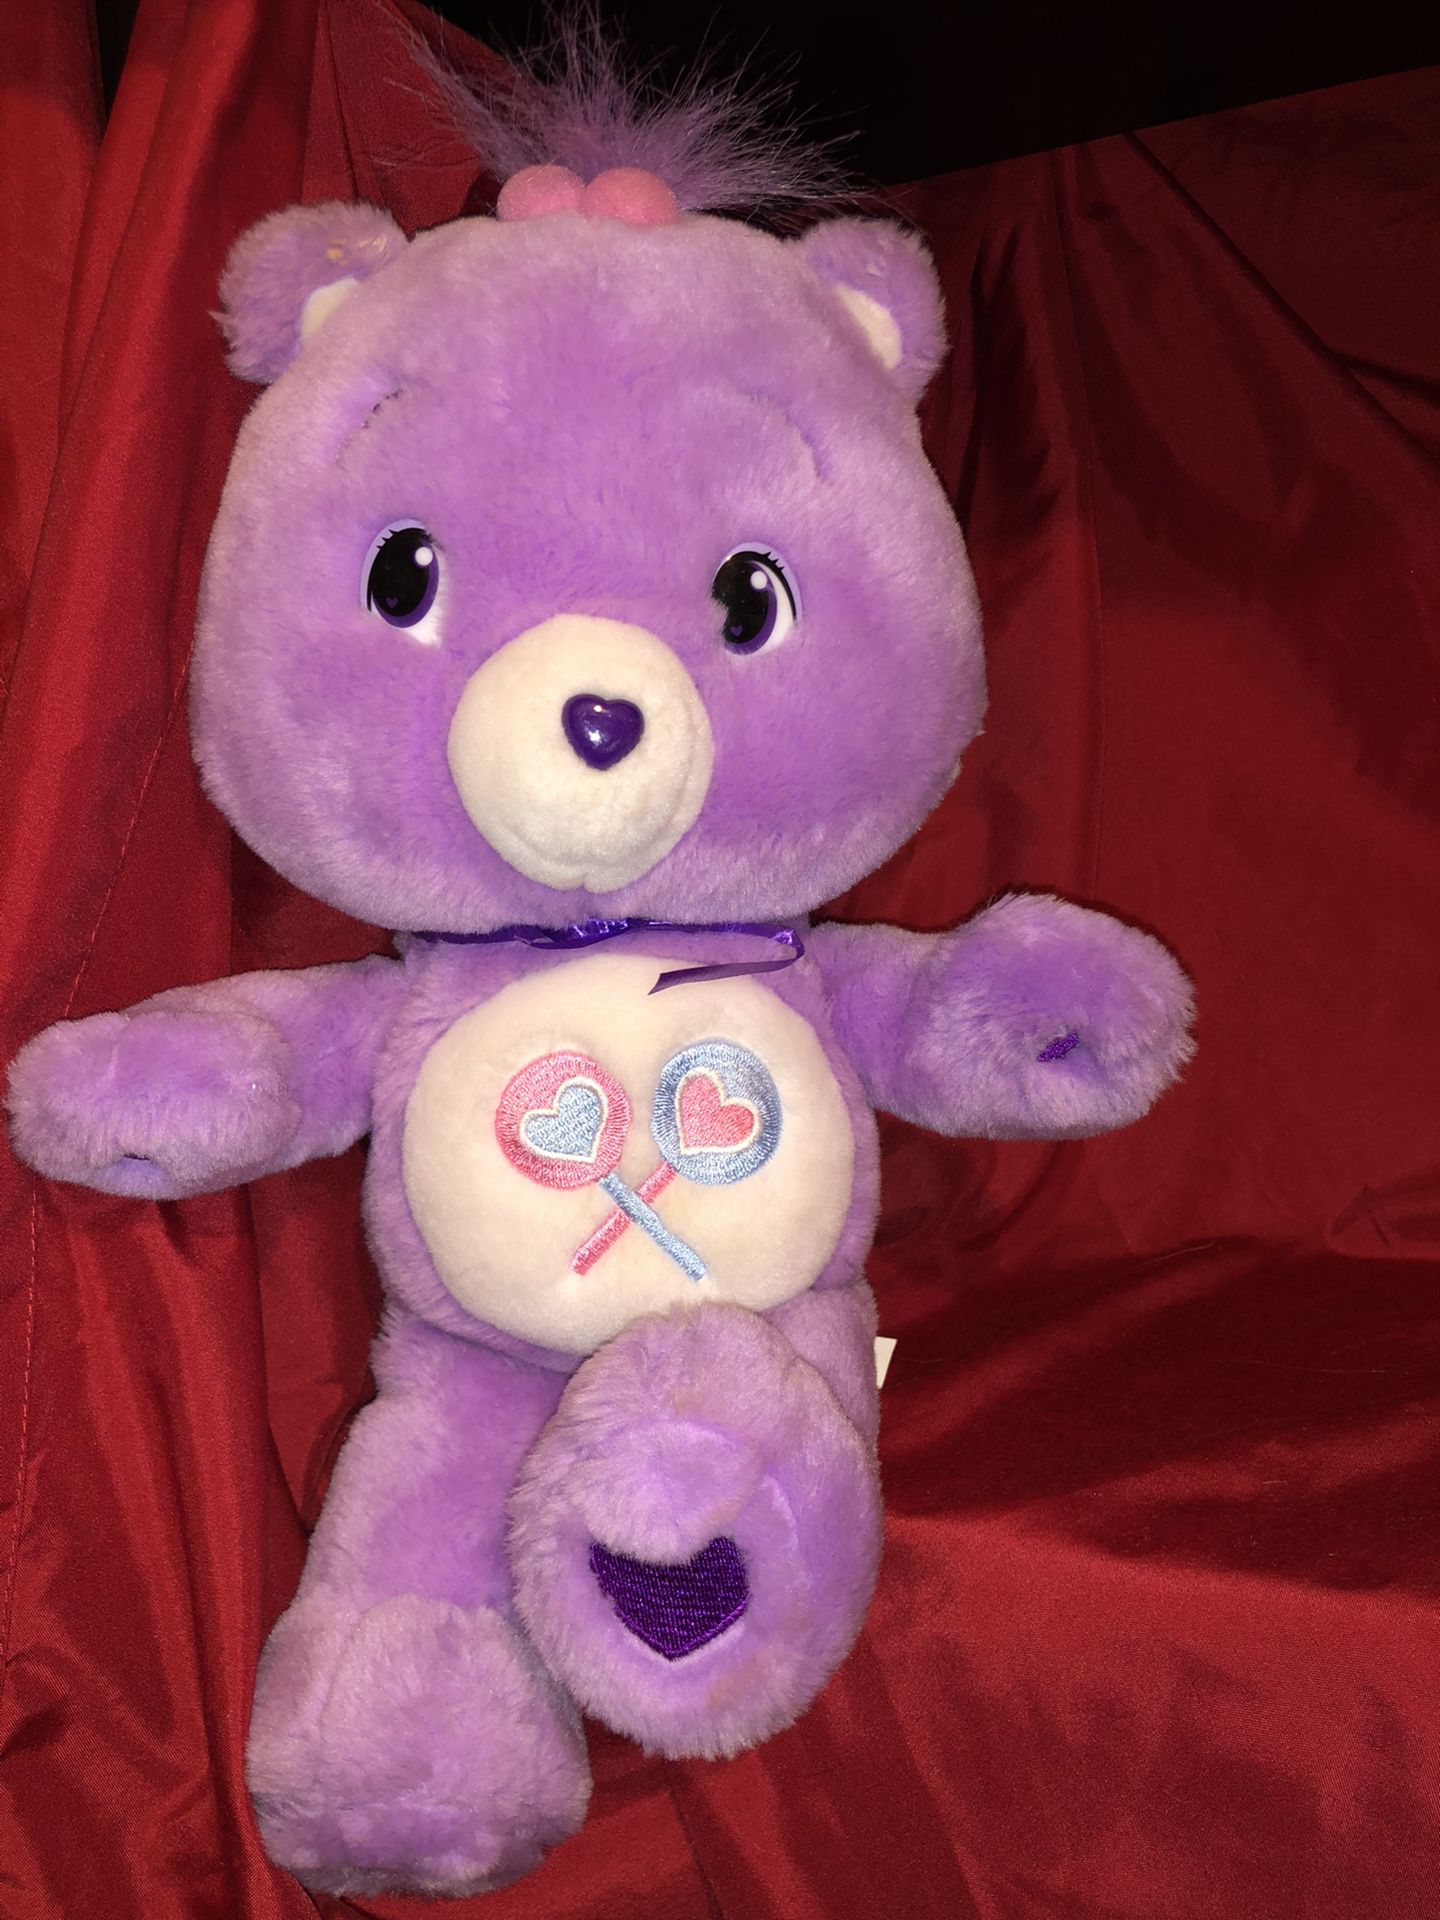 Share Bear Carebears purple lollipop 🍭 Carebear plush doll toy sale ! Large 14” tall!